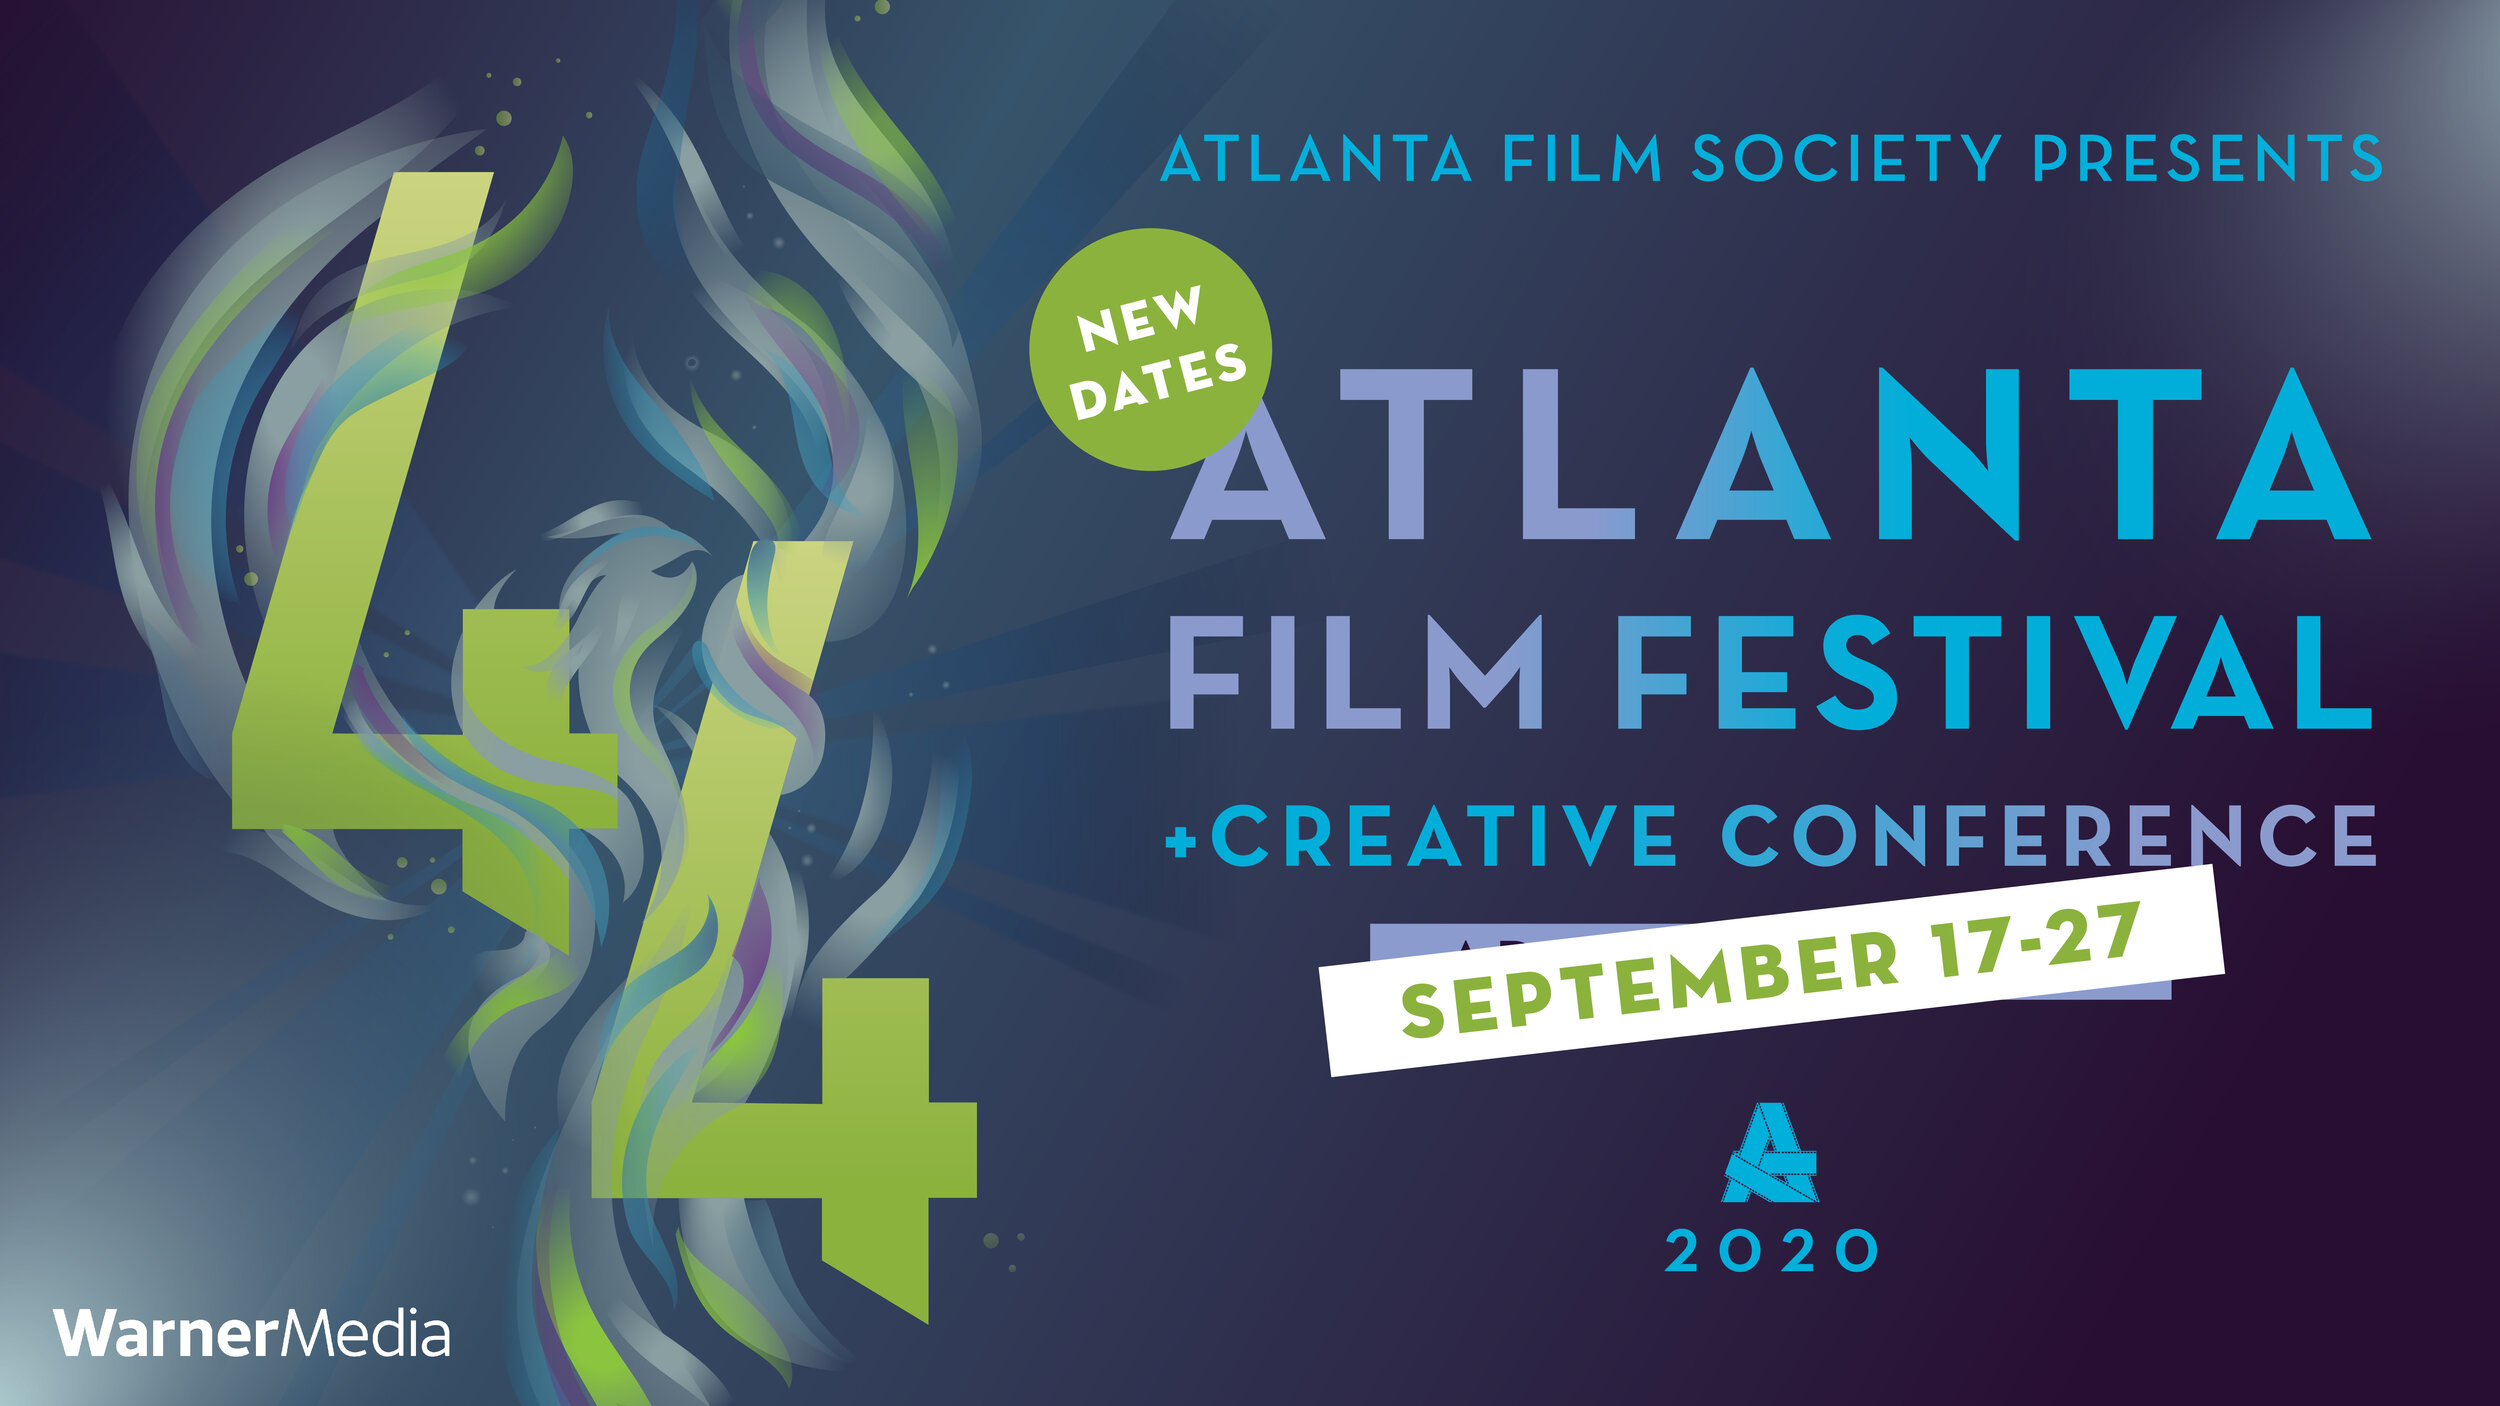 Atlanta Film Festival Creative Conference Reveals New Dates And